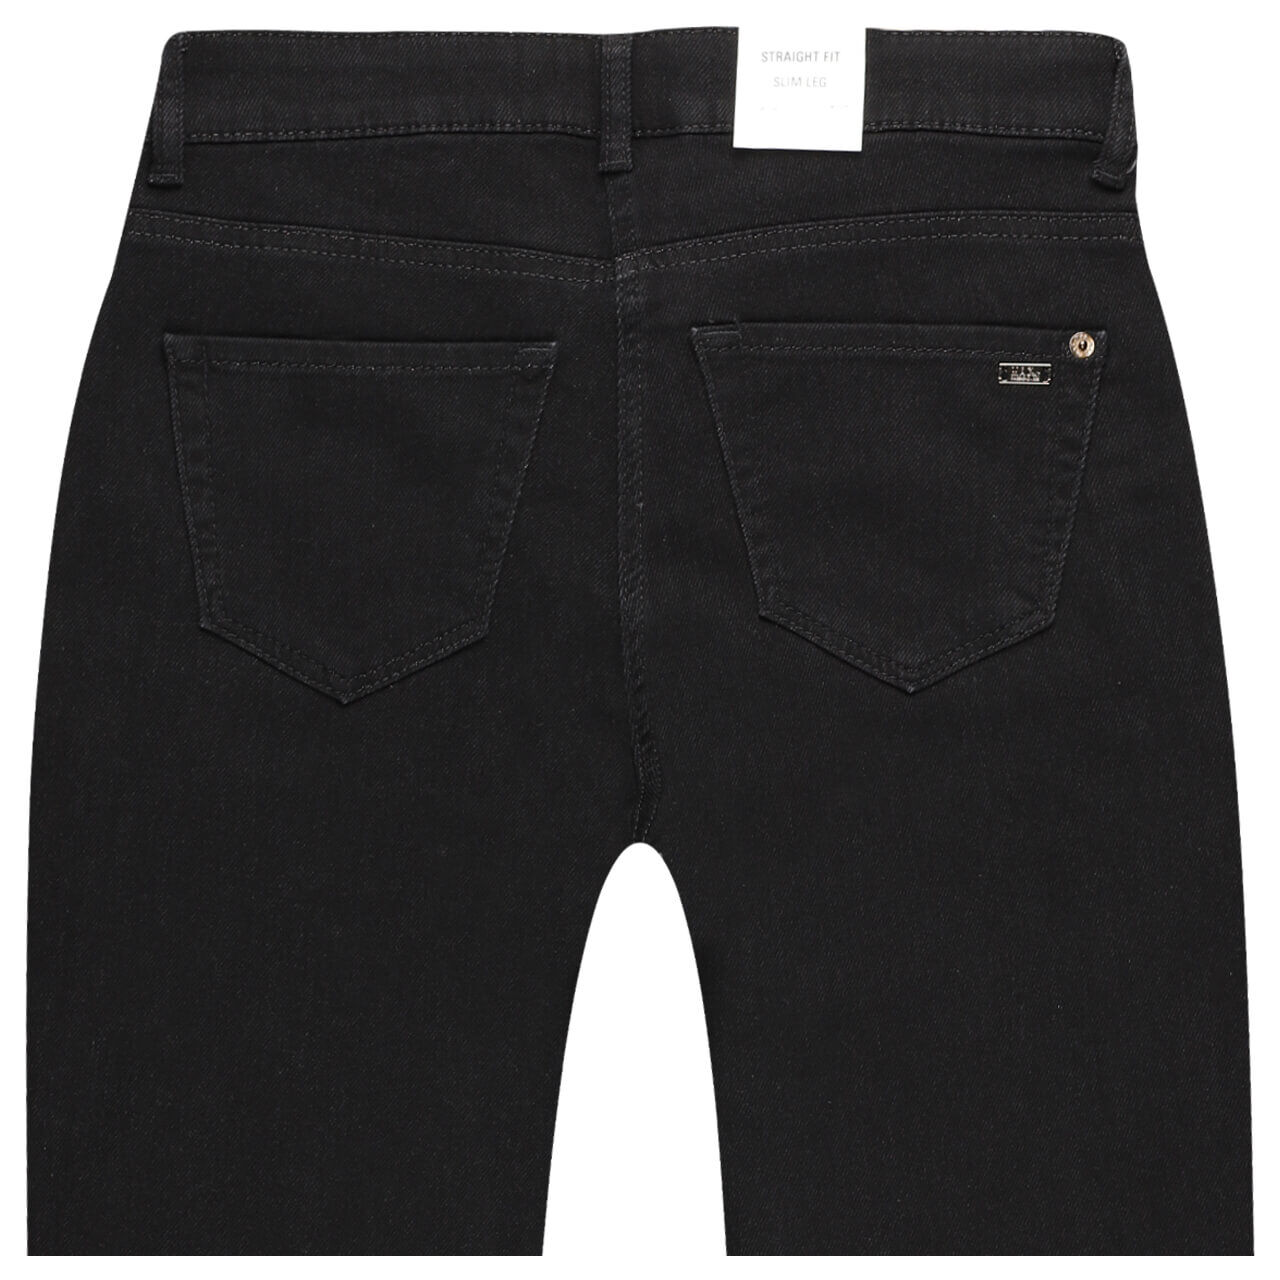 MAC Slim Jeans discreet black thermo denim